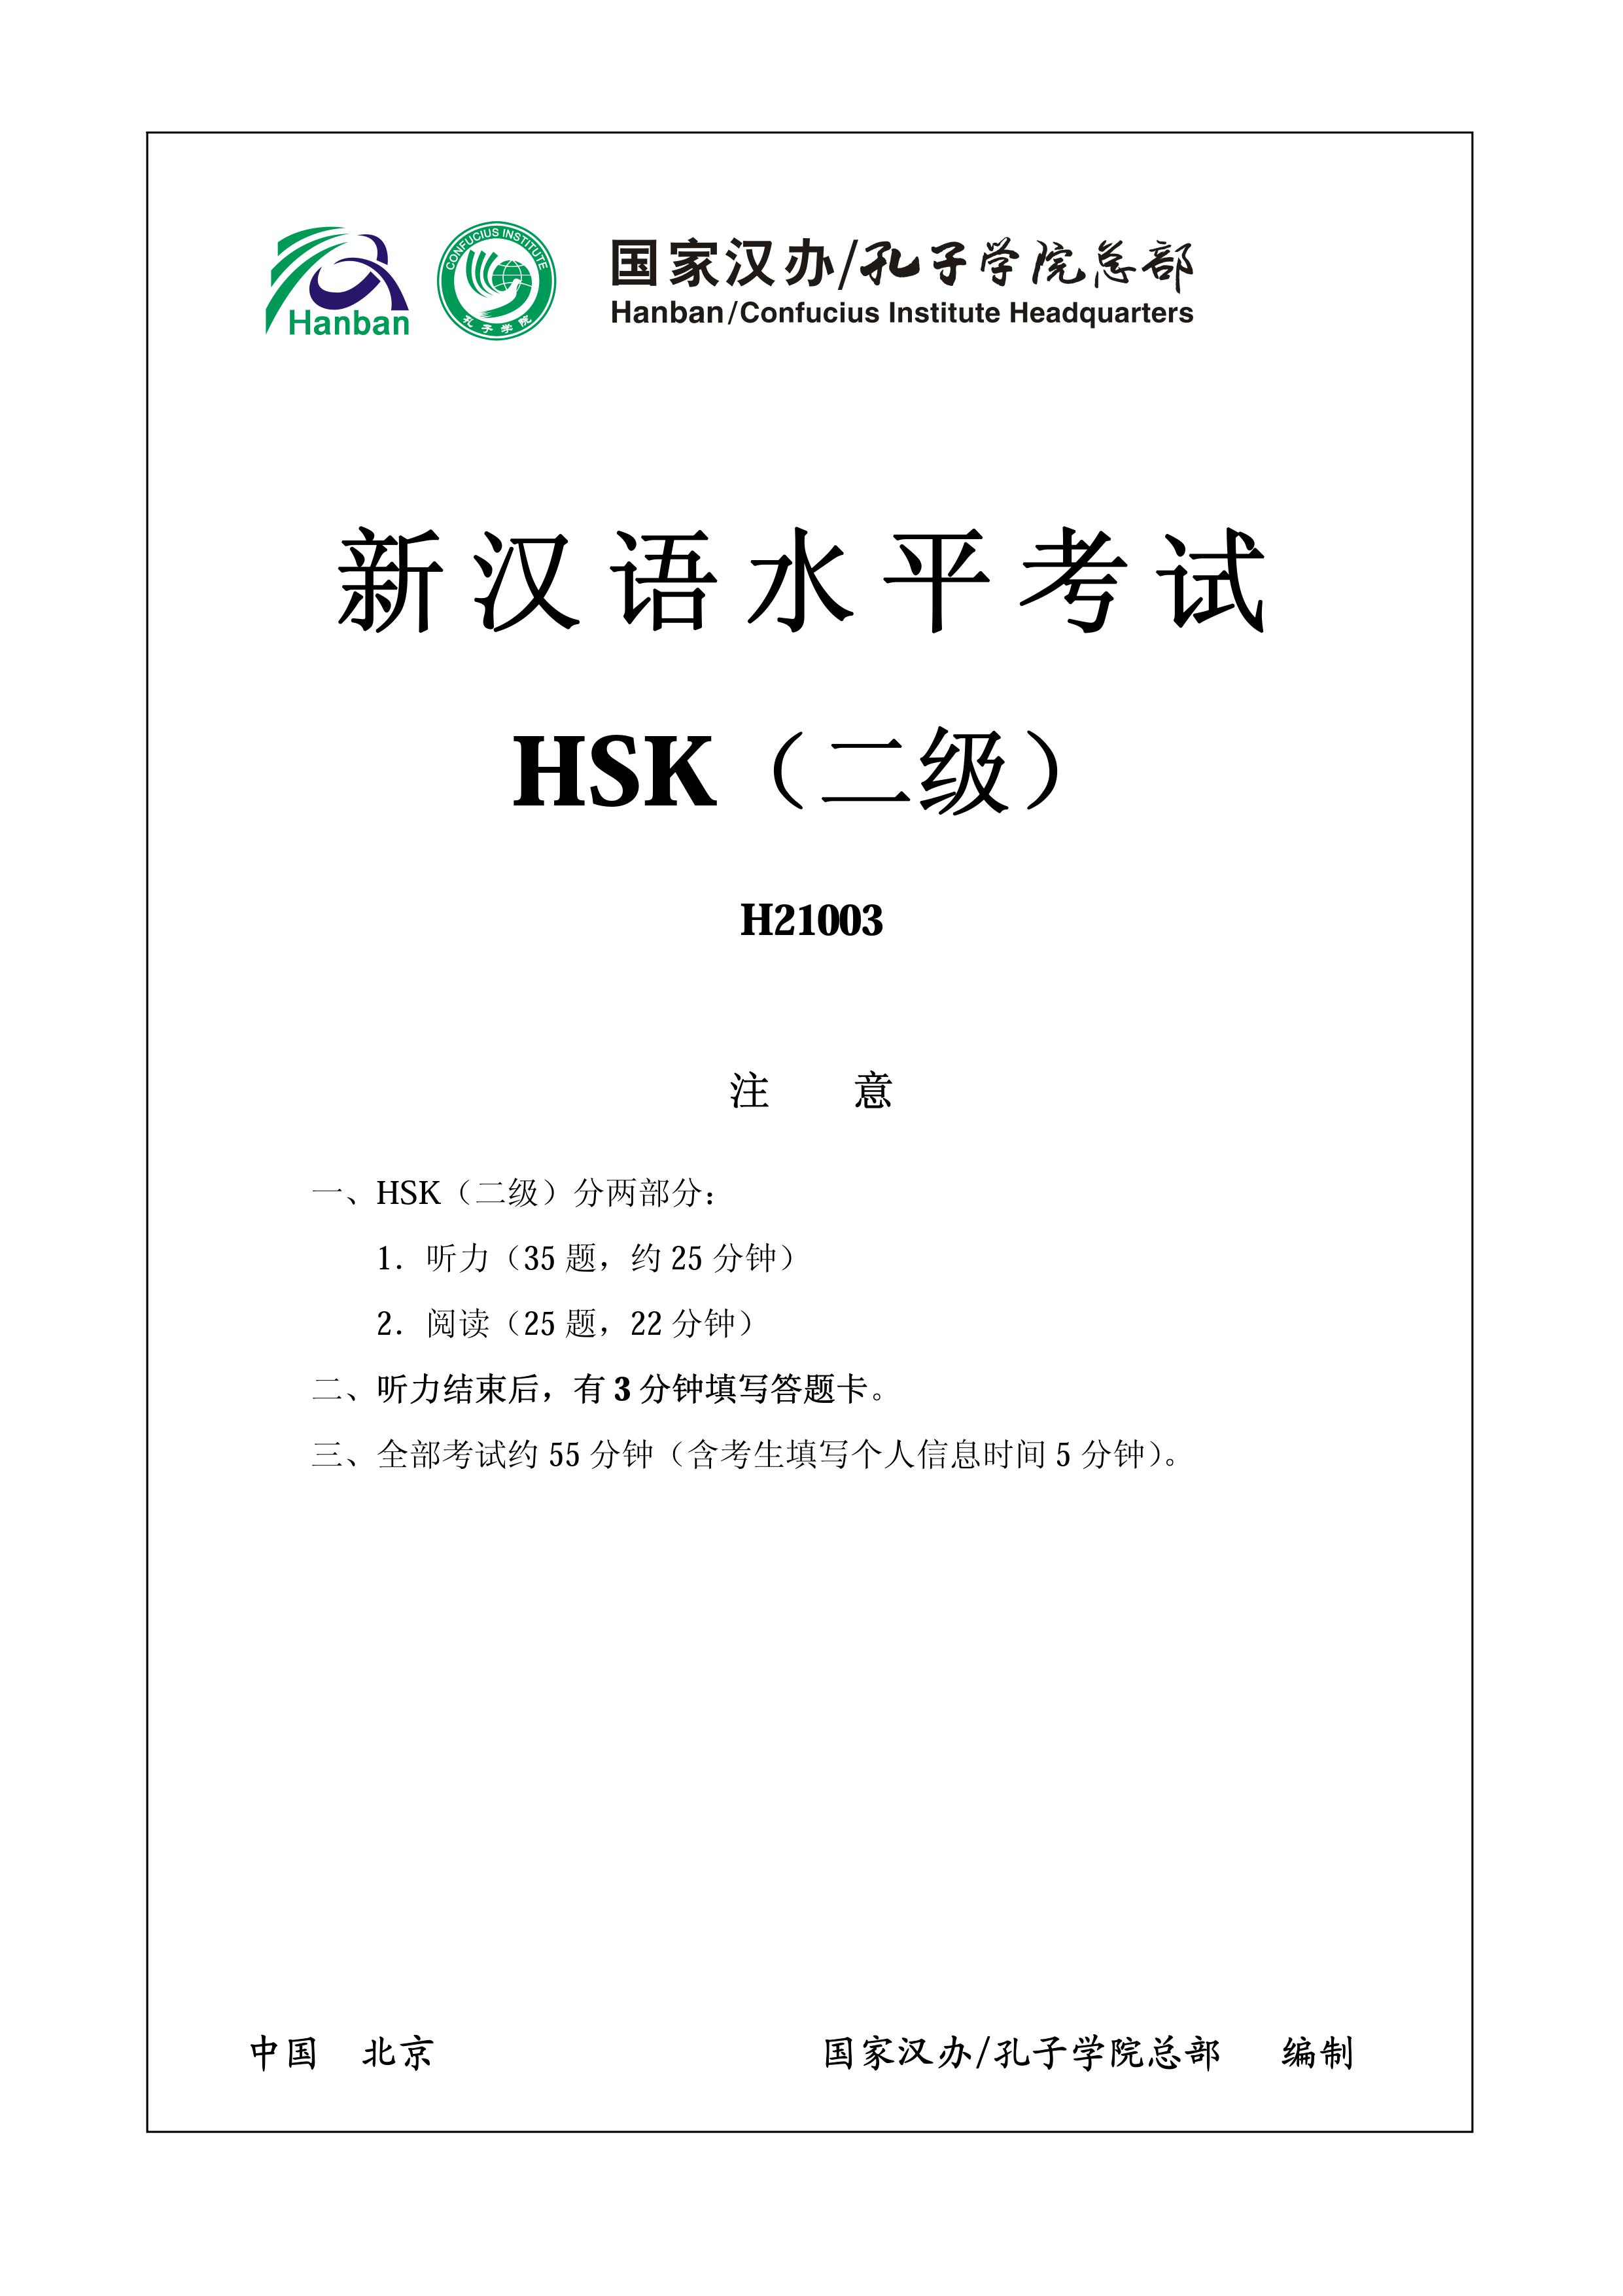 HSK 2 – тема